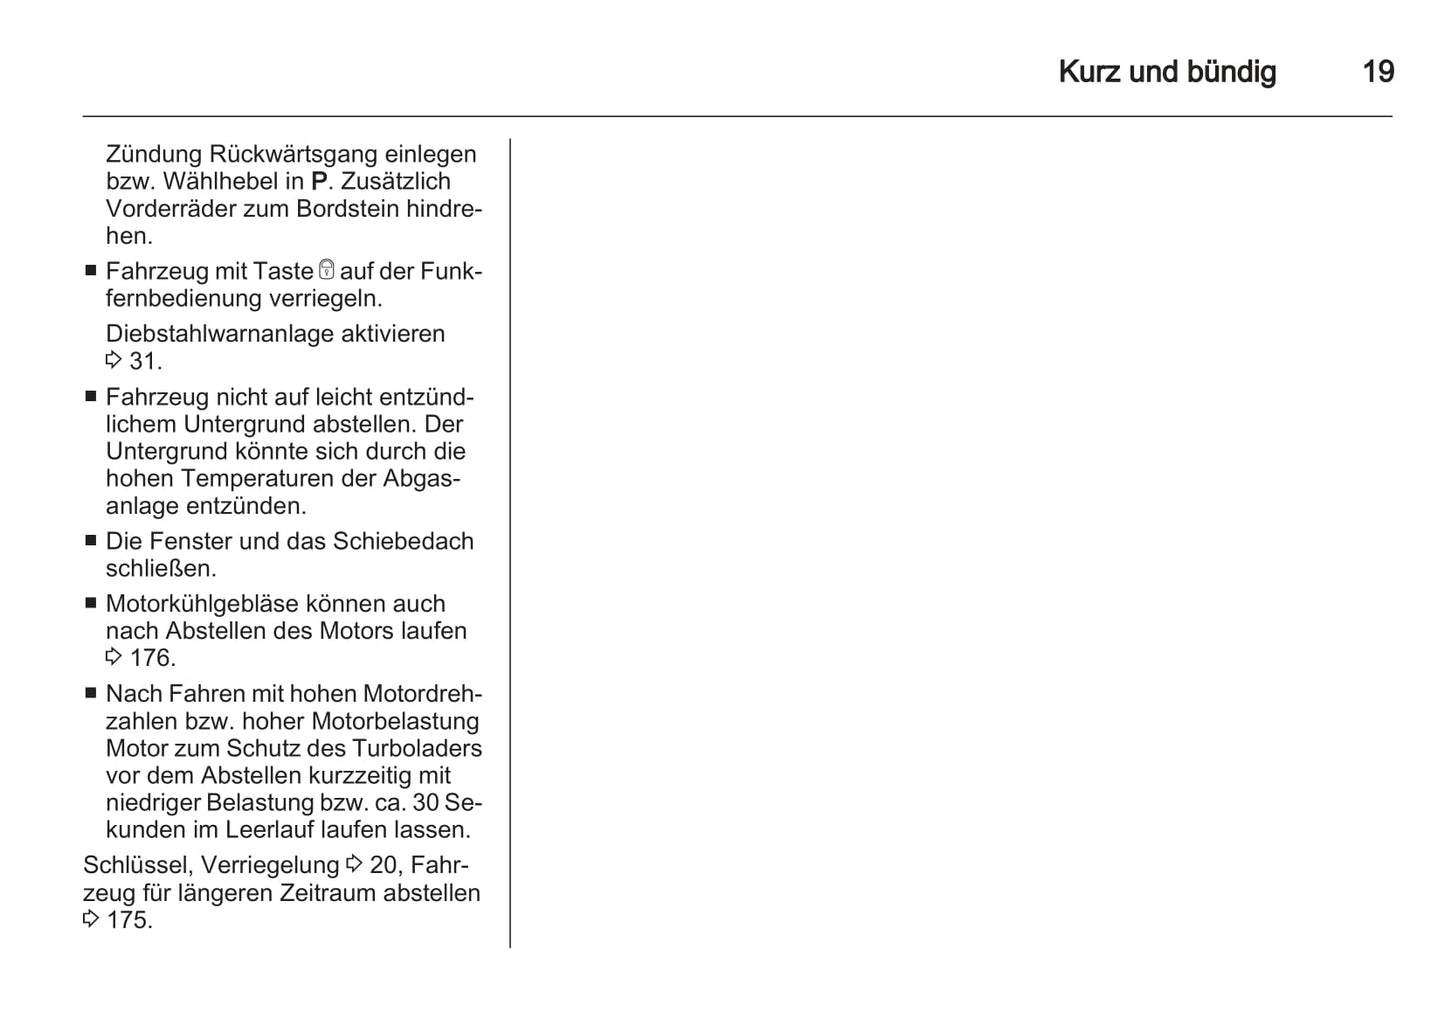 2011-2012 Opel Insignia Gebruikershandleiding | Duits